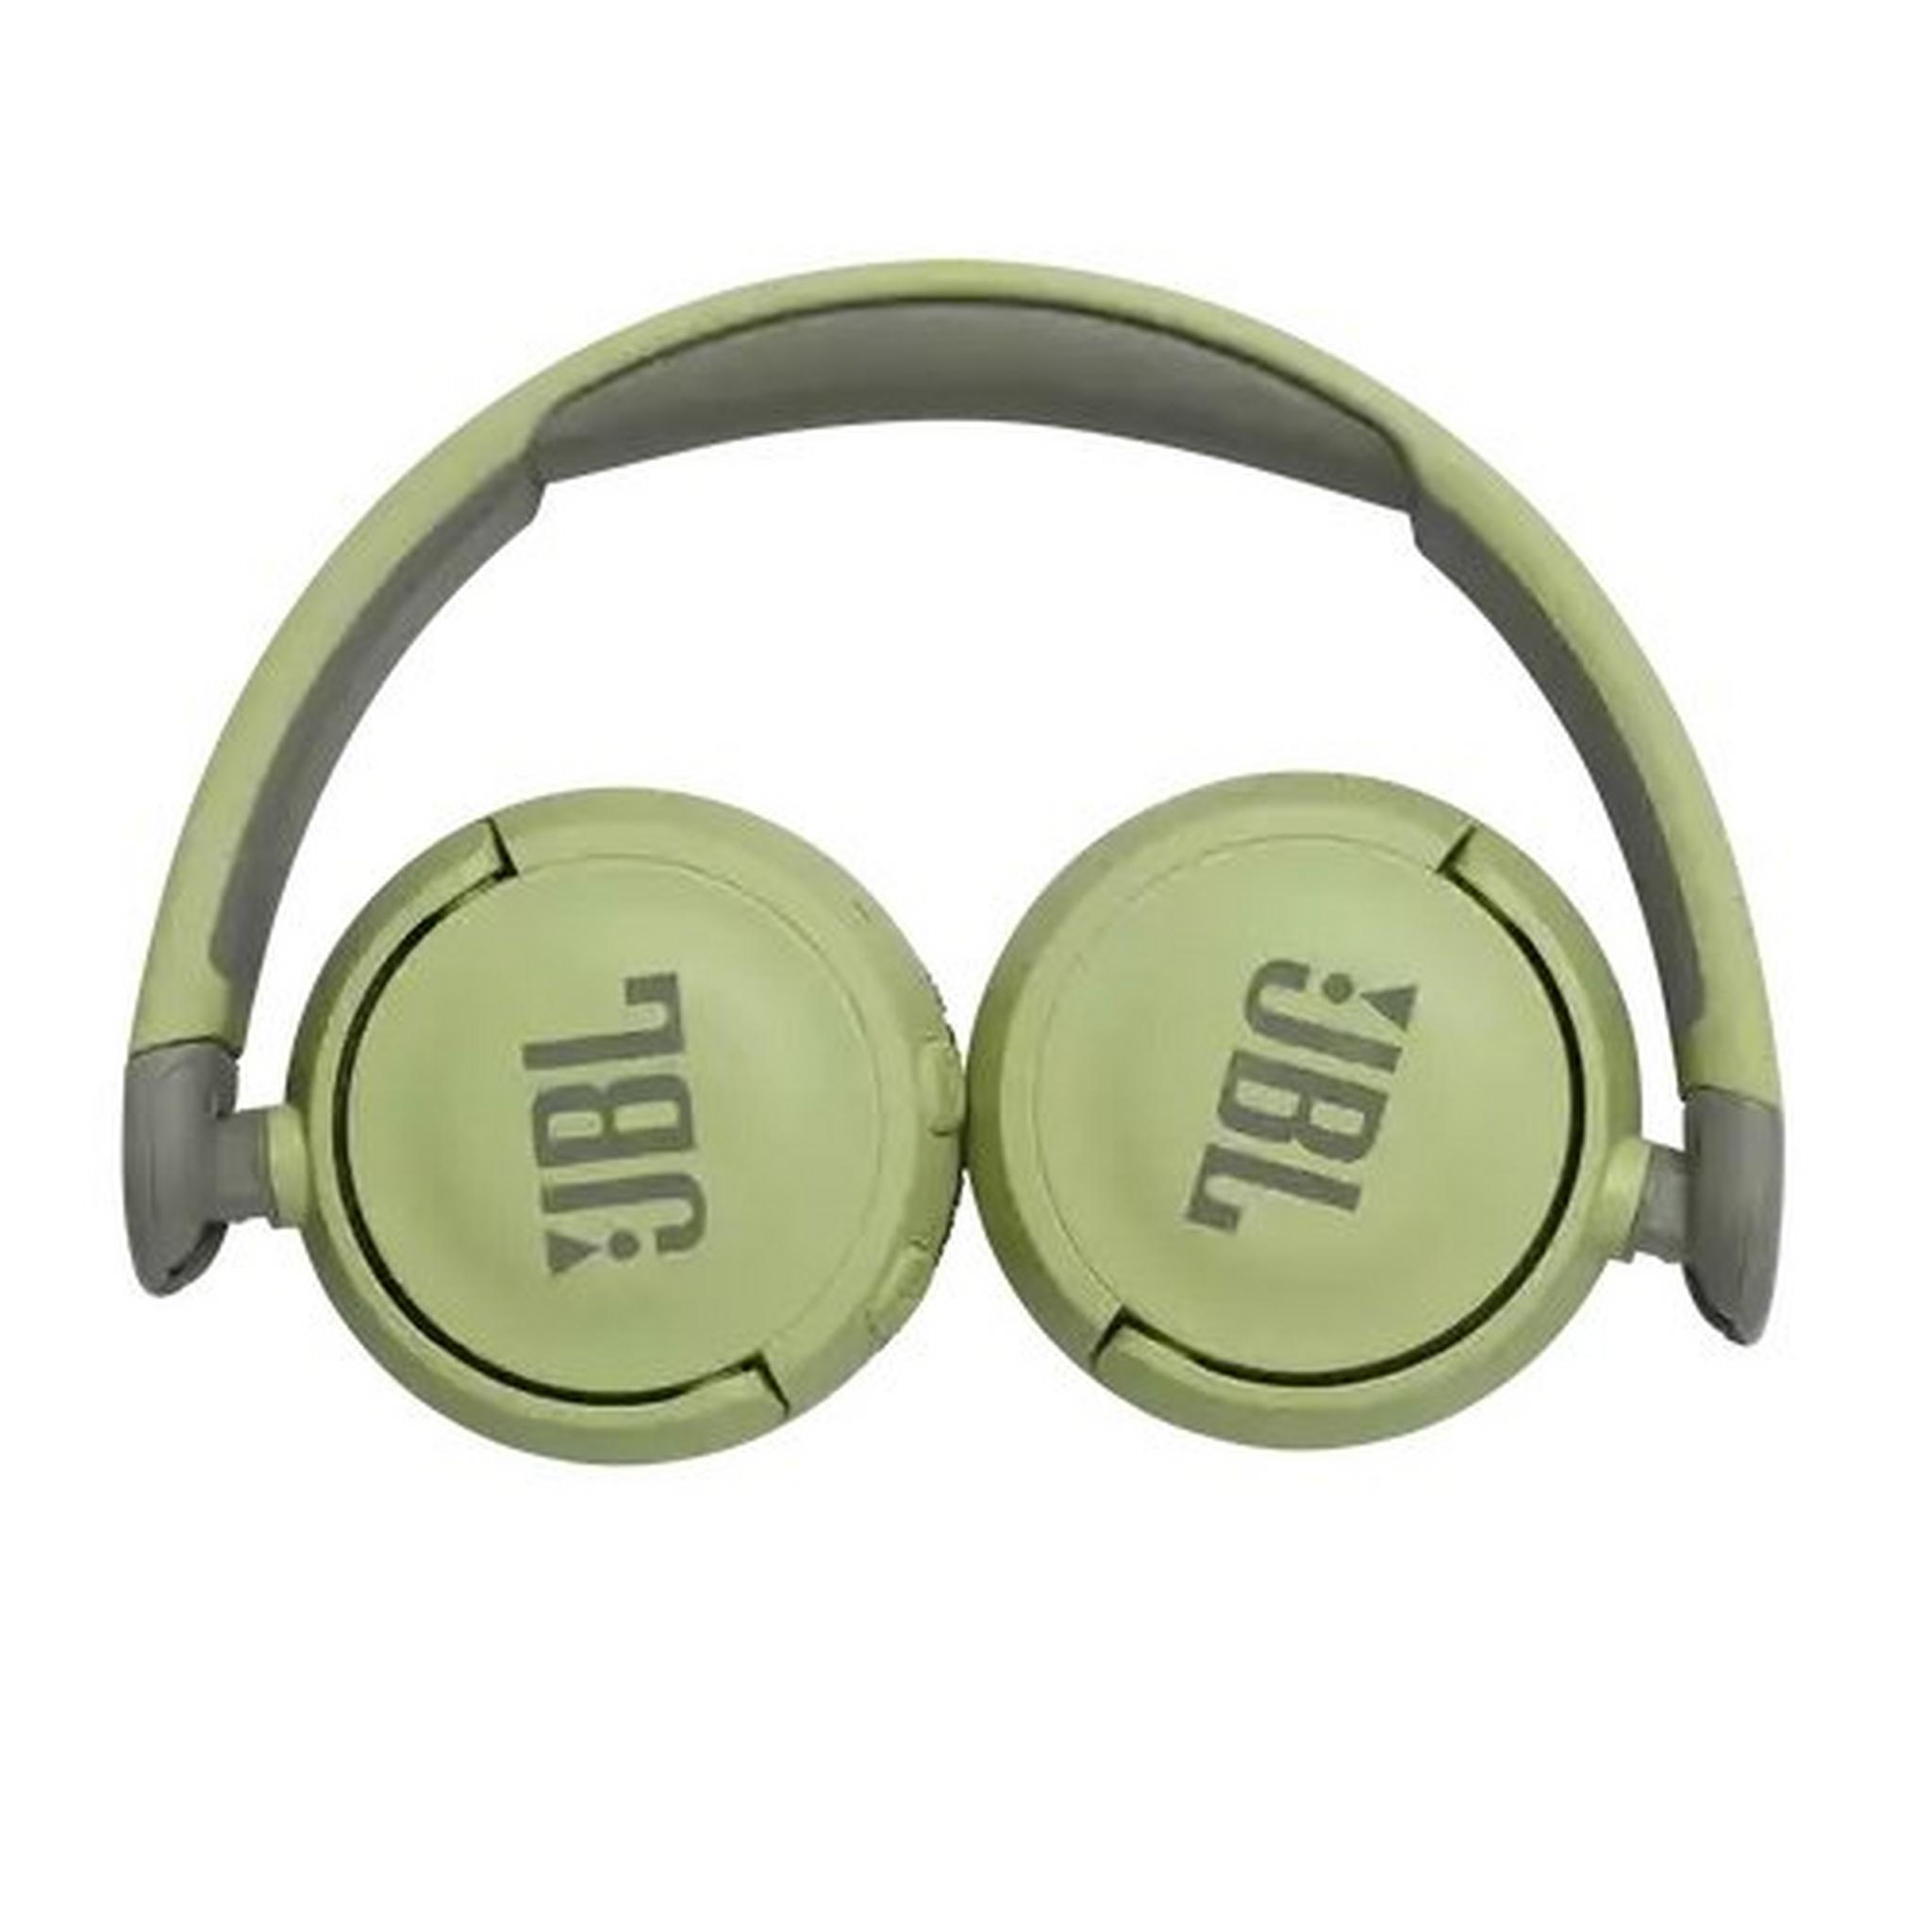 JBL Kids Wireless Headphones - Green  (JR310BT)